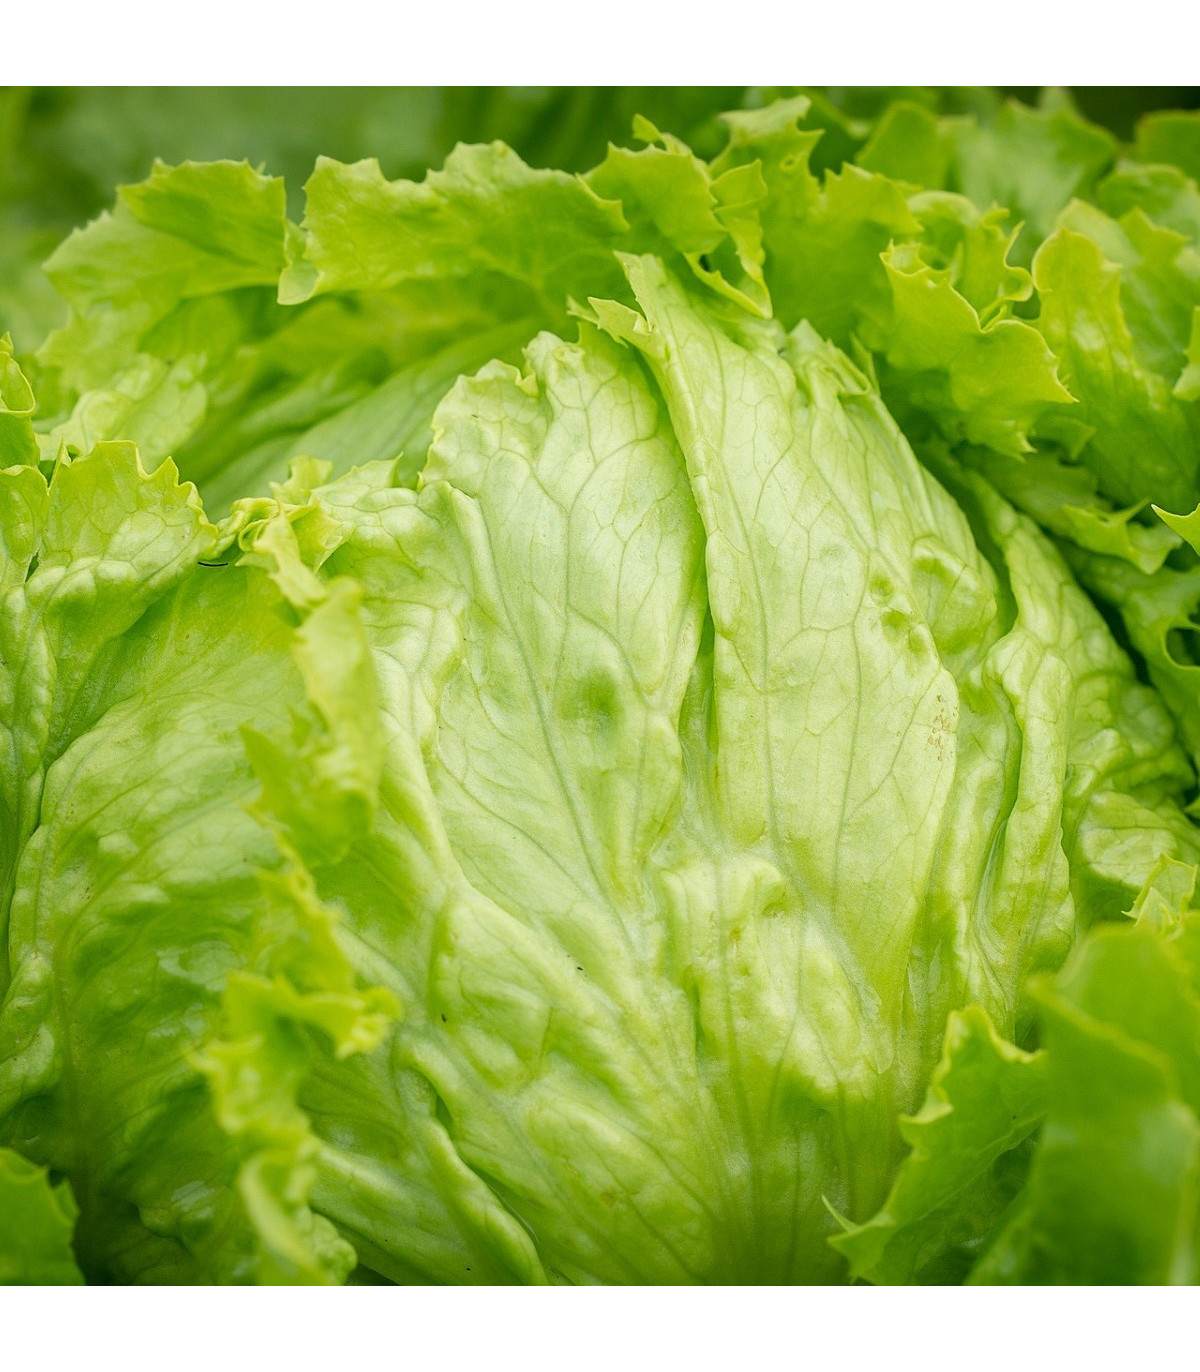 BIO Salát ledový Saladin - Lactuca sativa - bio osivo salátu - 100 ks